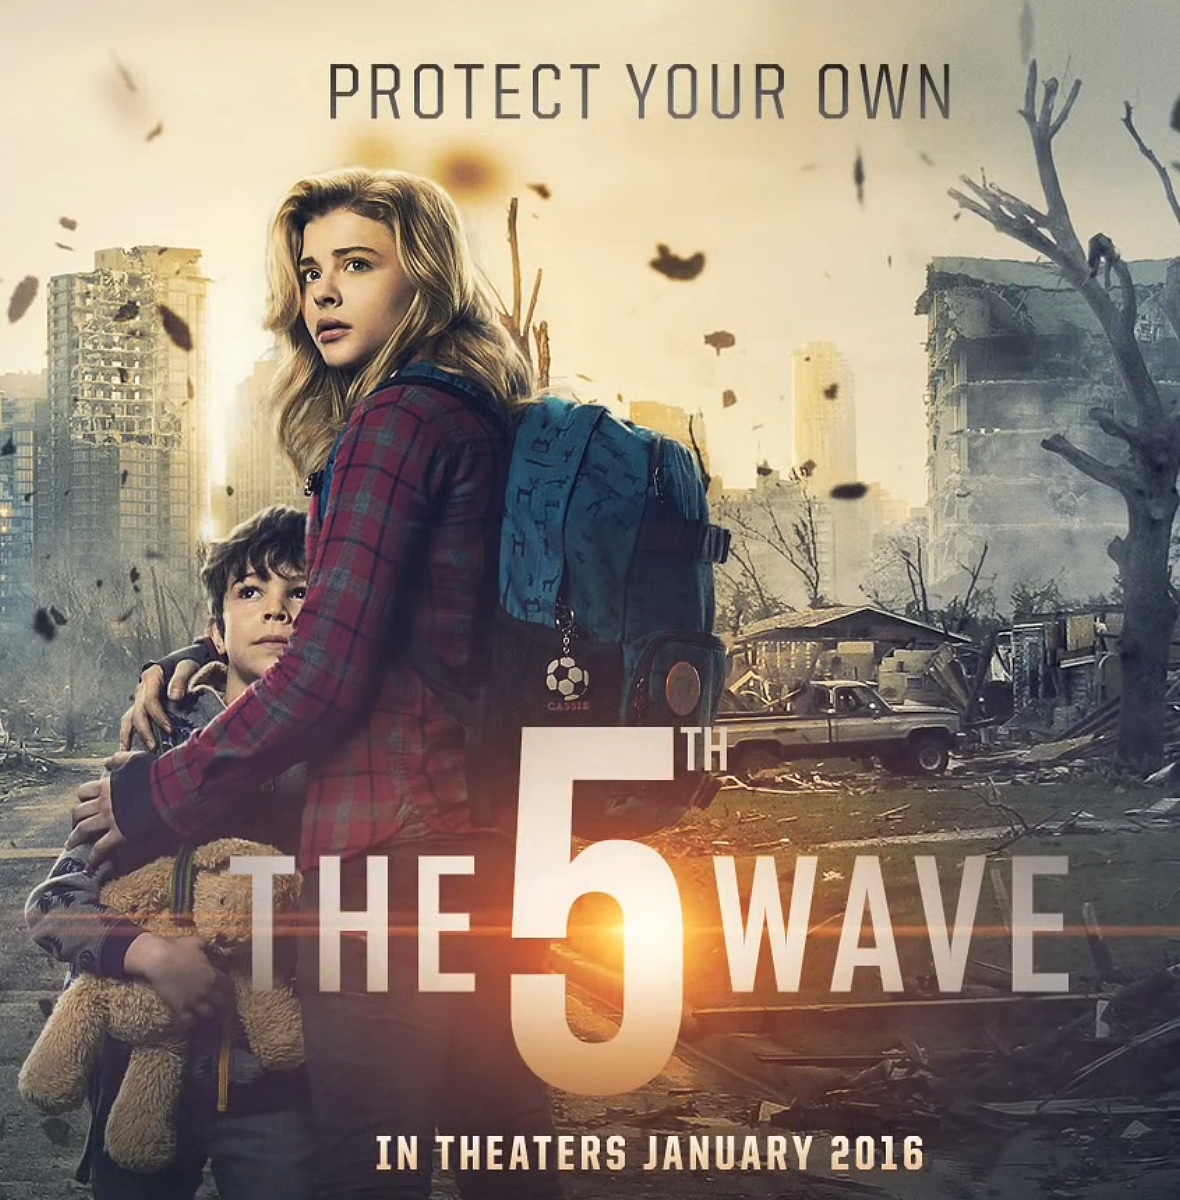 Chloë Grace Moretz in The 5th Wave